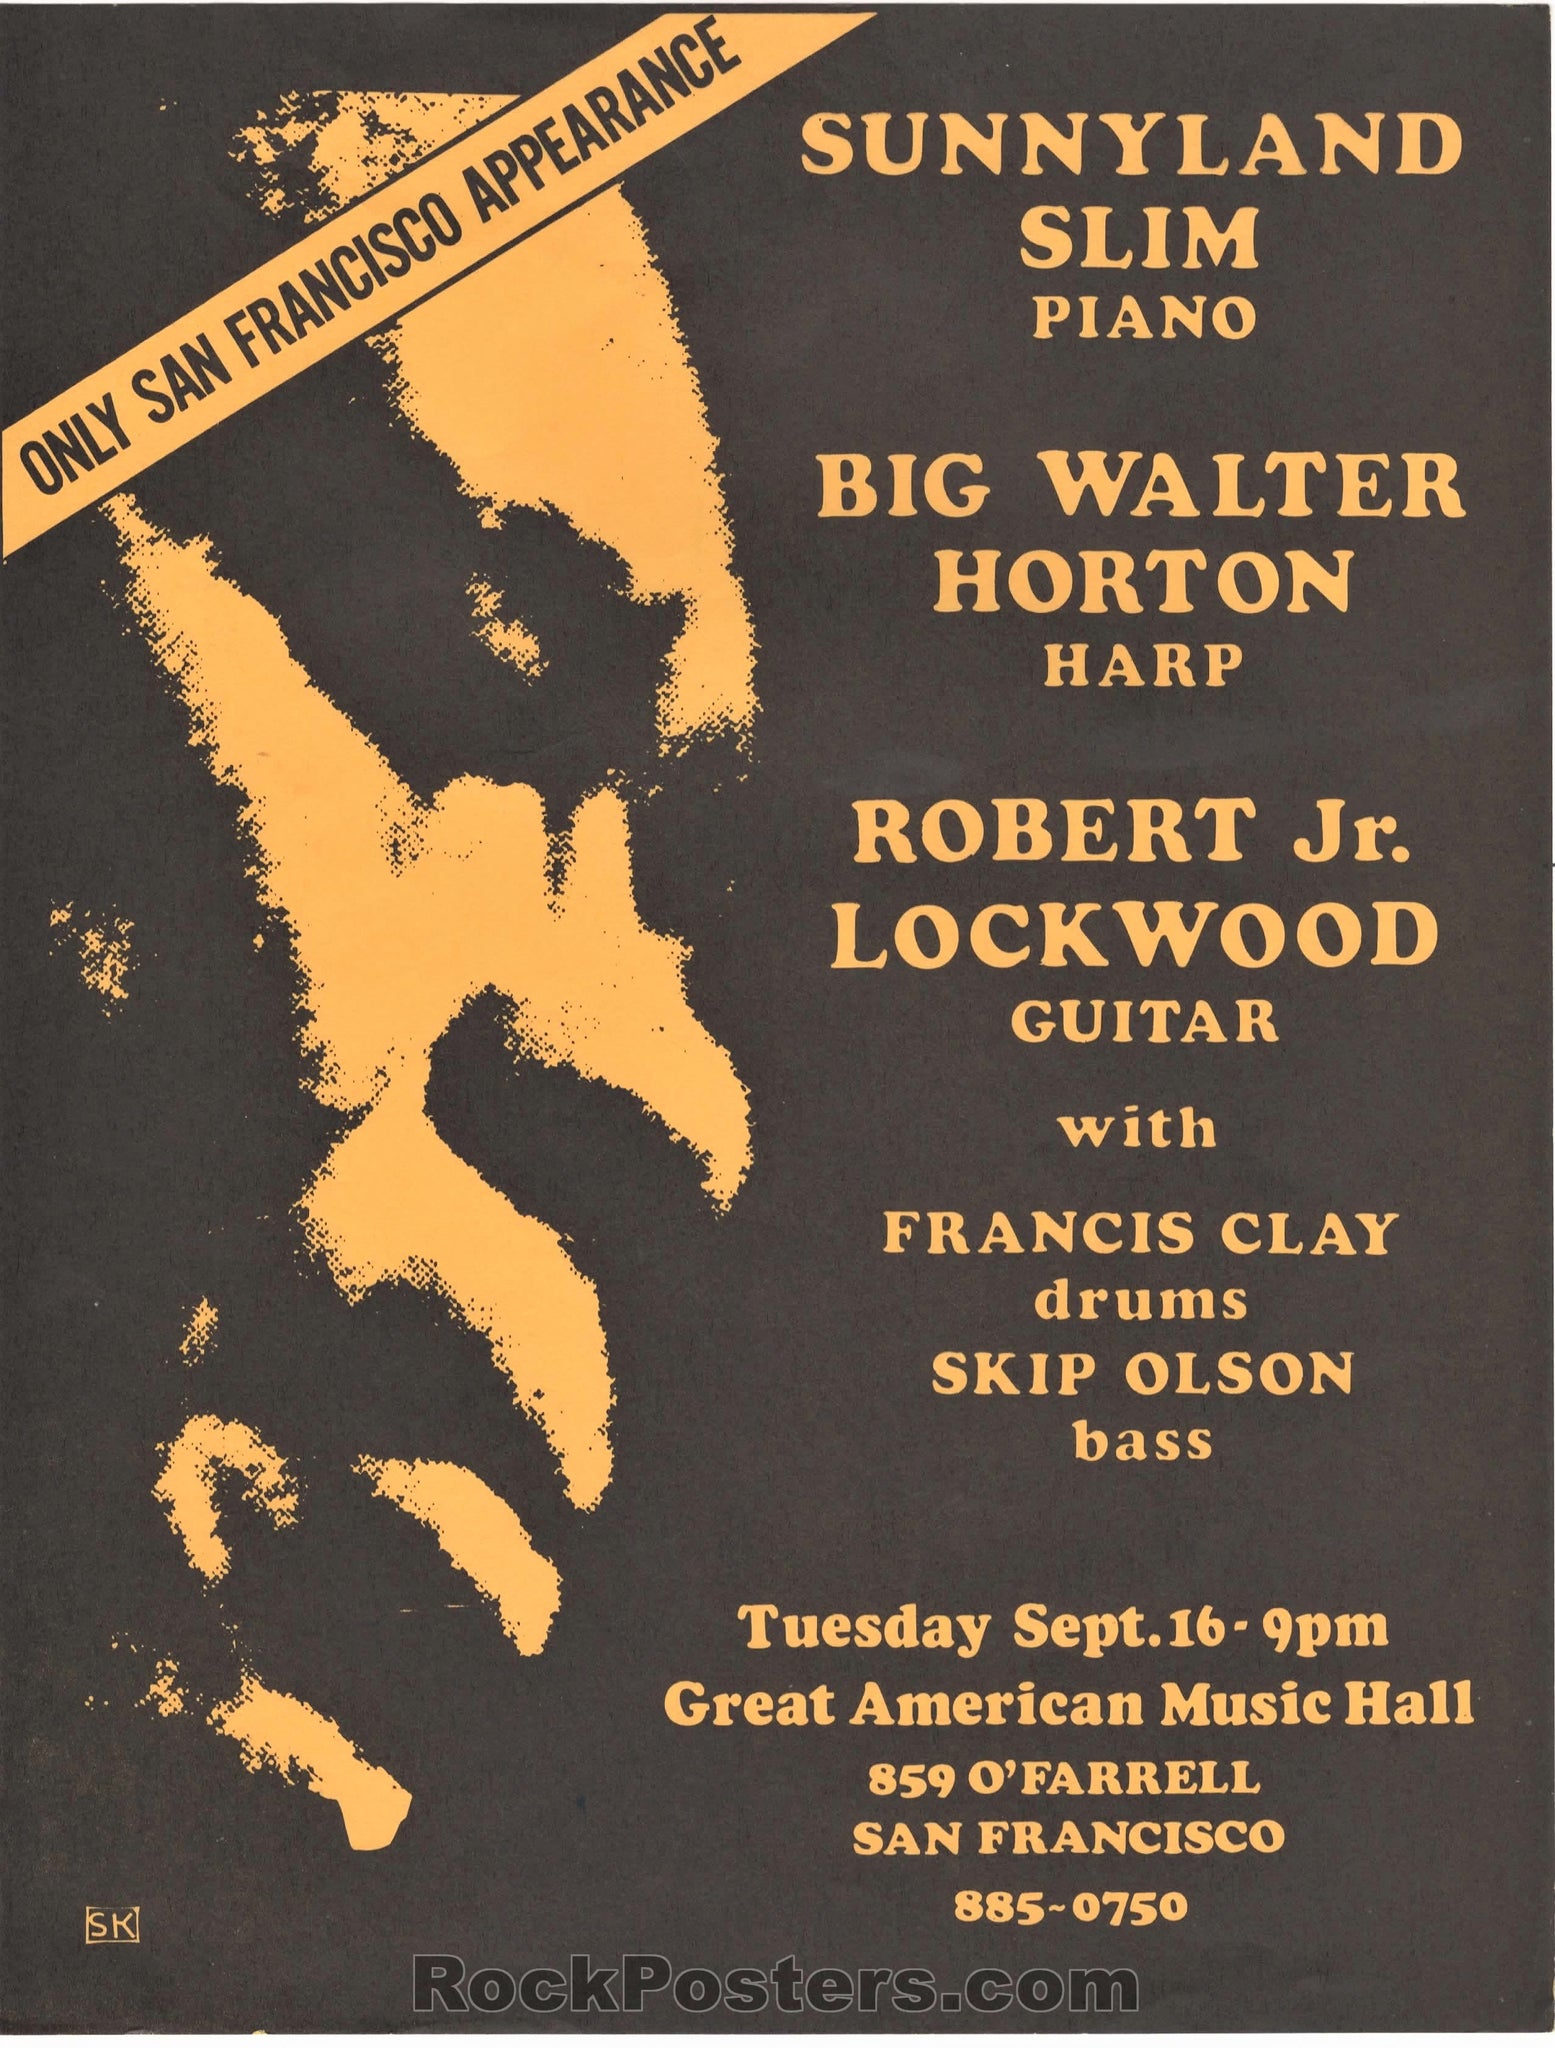 AUCTION - AOR-4.27 - Sunnyland Slim - 1975 Handbill - Great American Music Hall - Near Mint